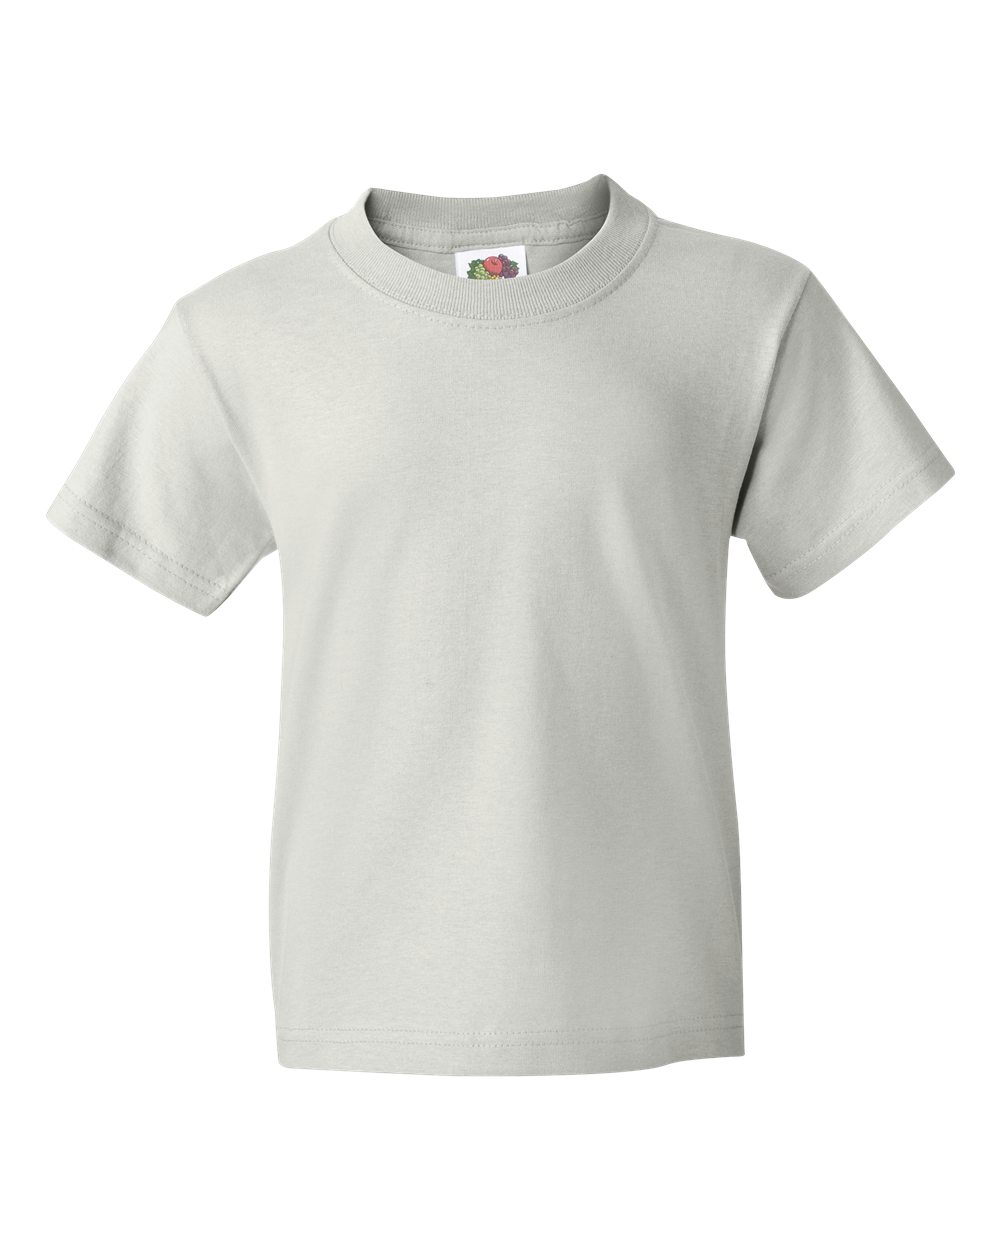 HD Cotton Youth Short Sleeve T-Shirt-